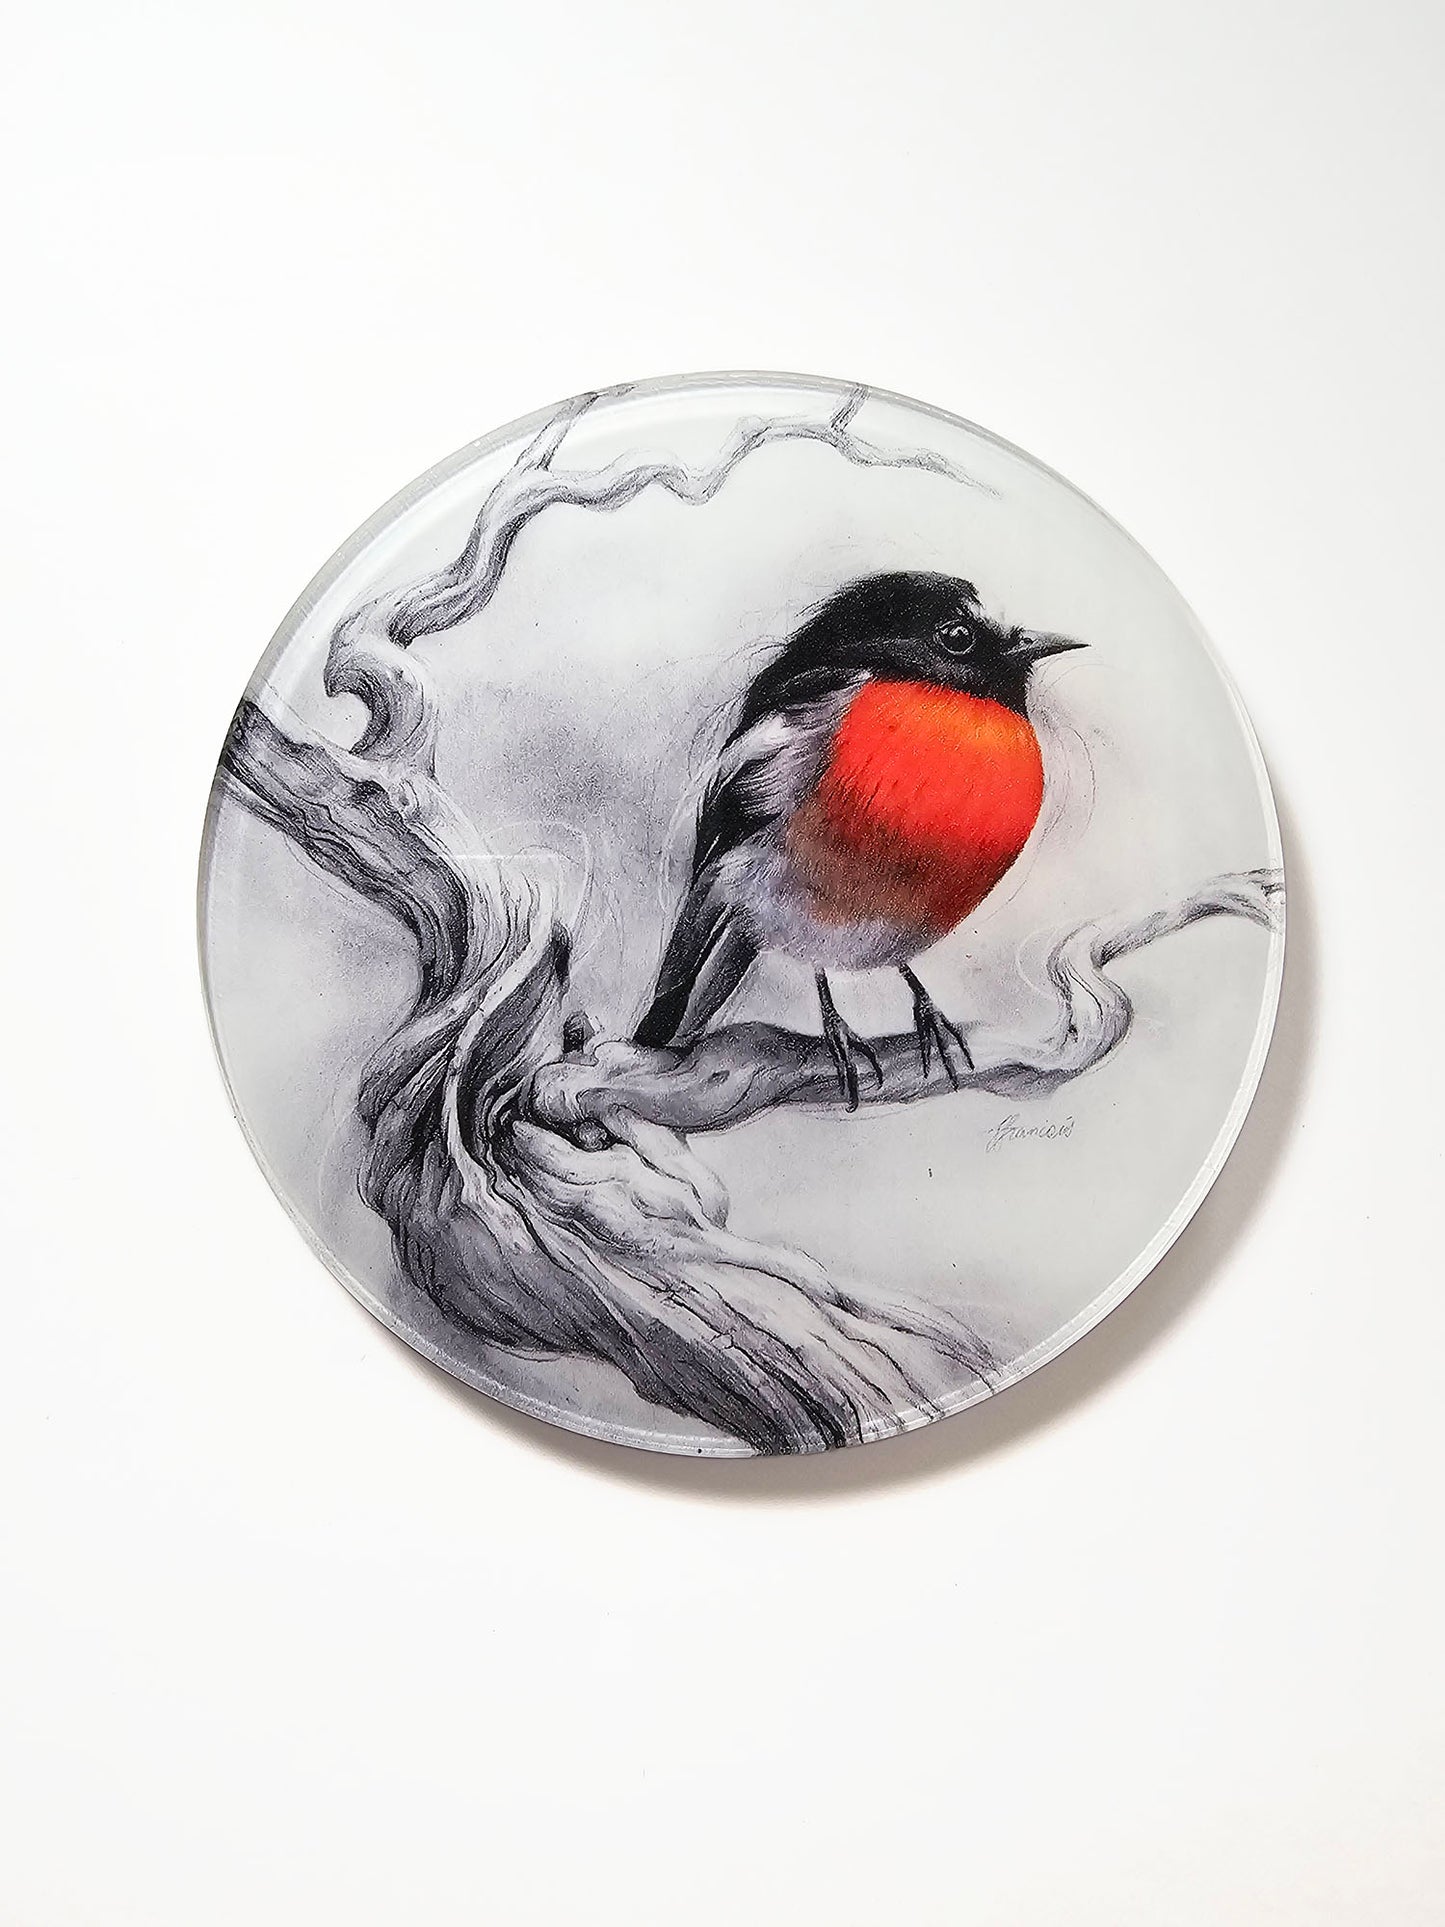 'Scarlet Robin' acrylic coaster